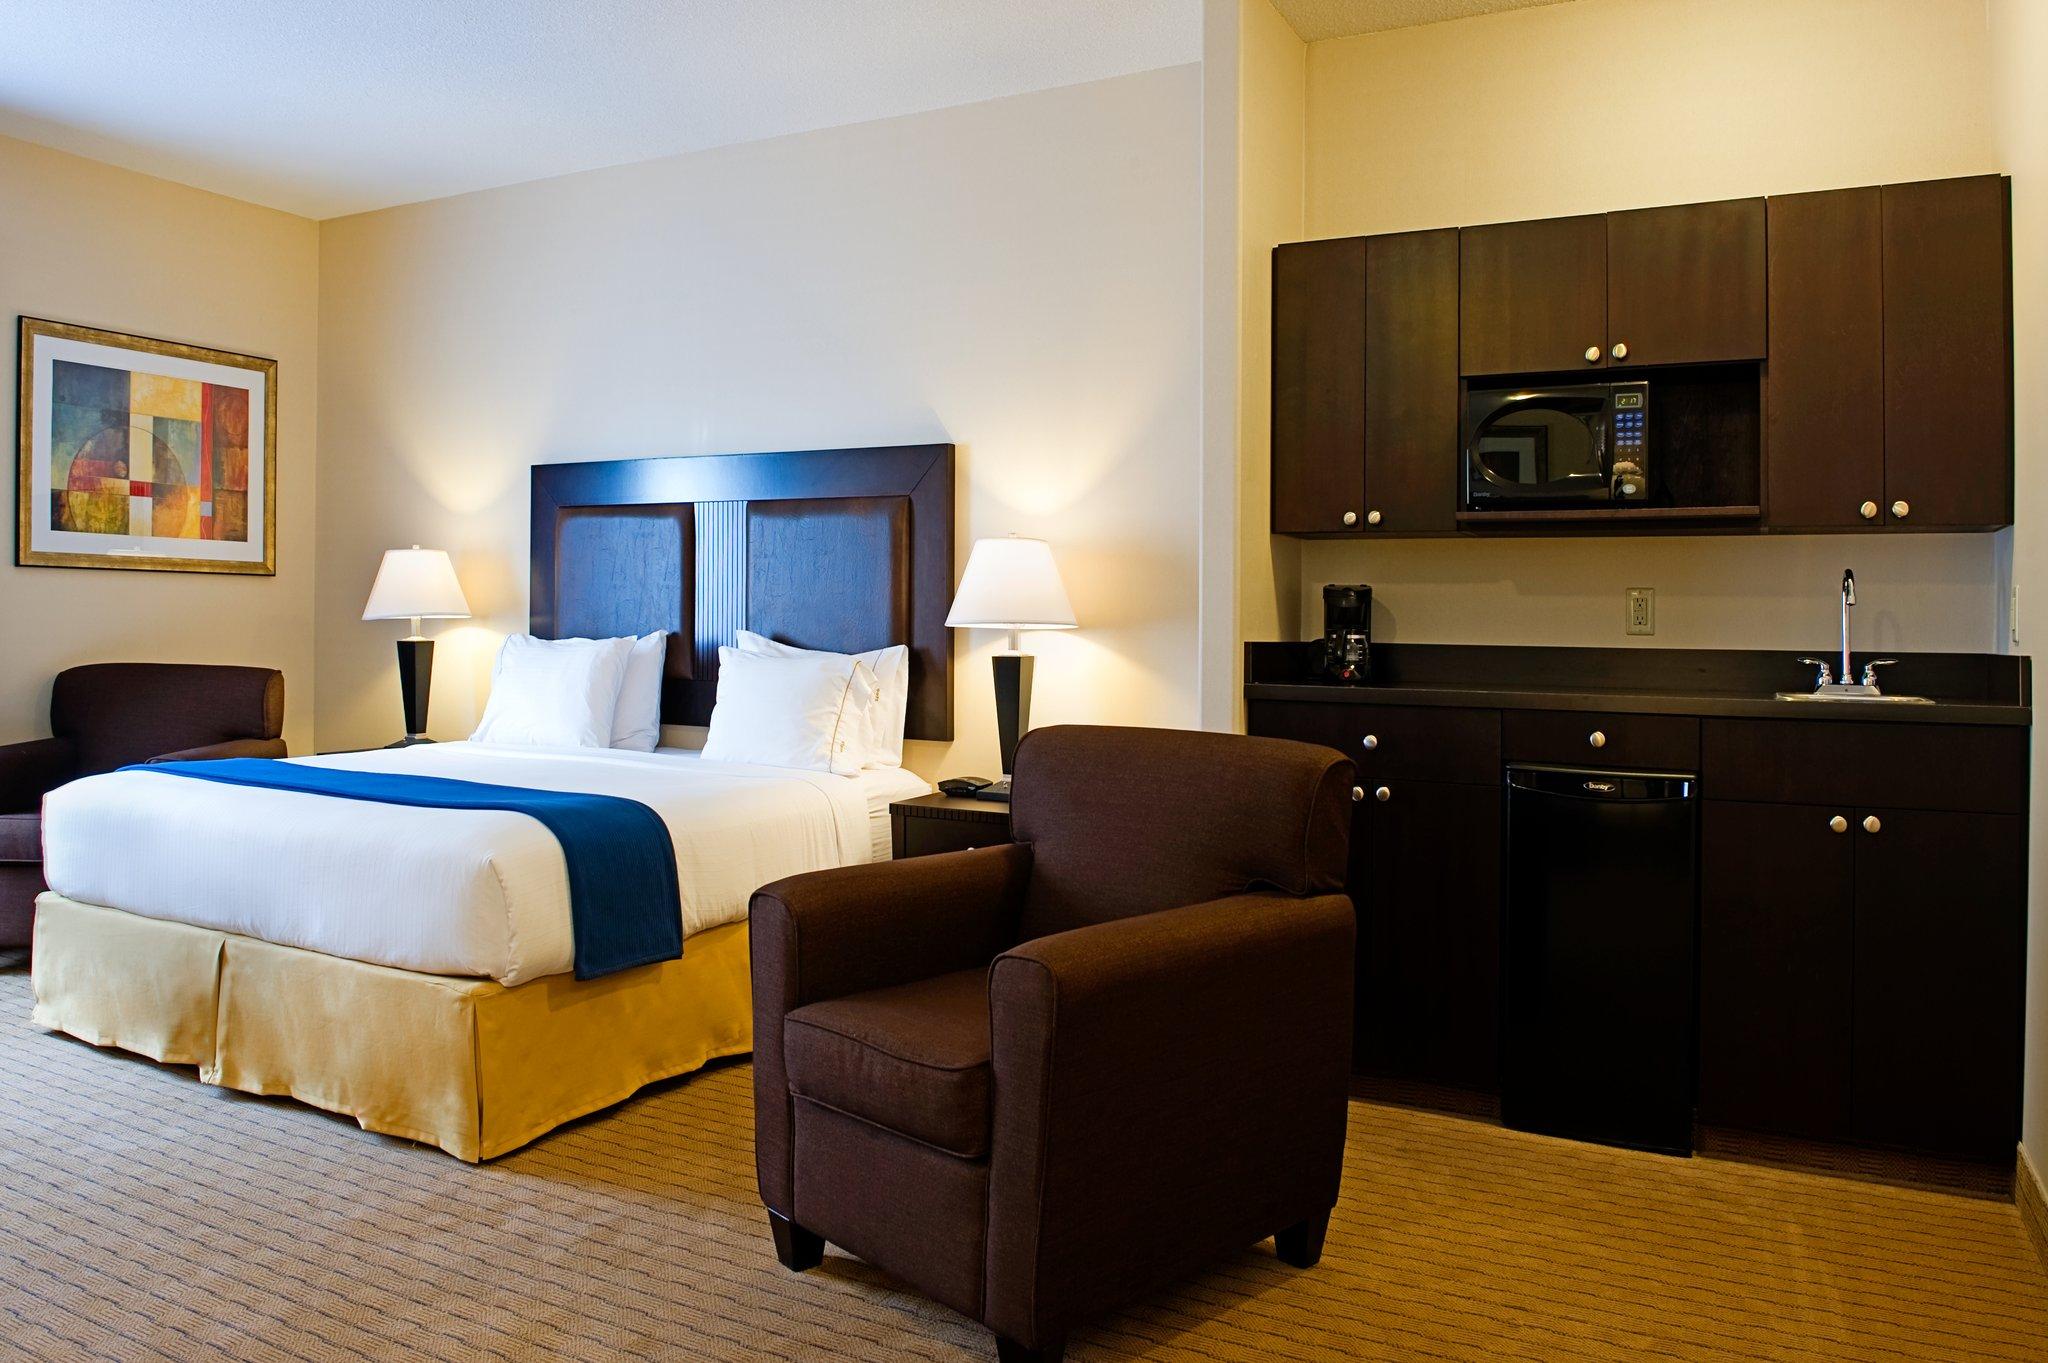 Holiday Inn Express & Suites Regina - South